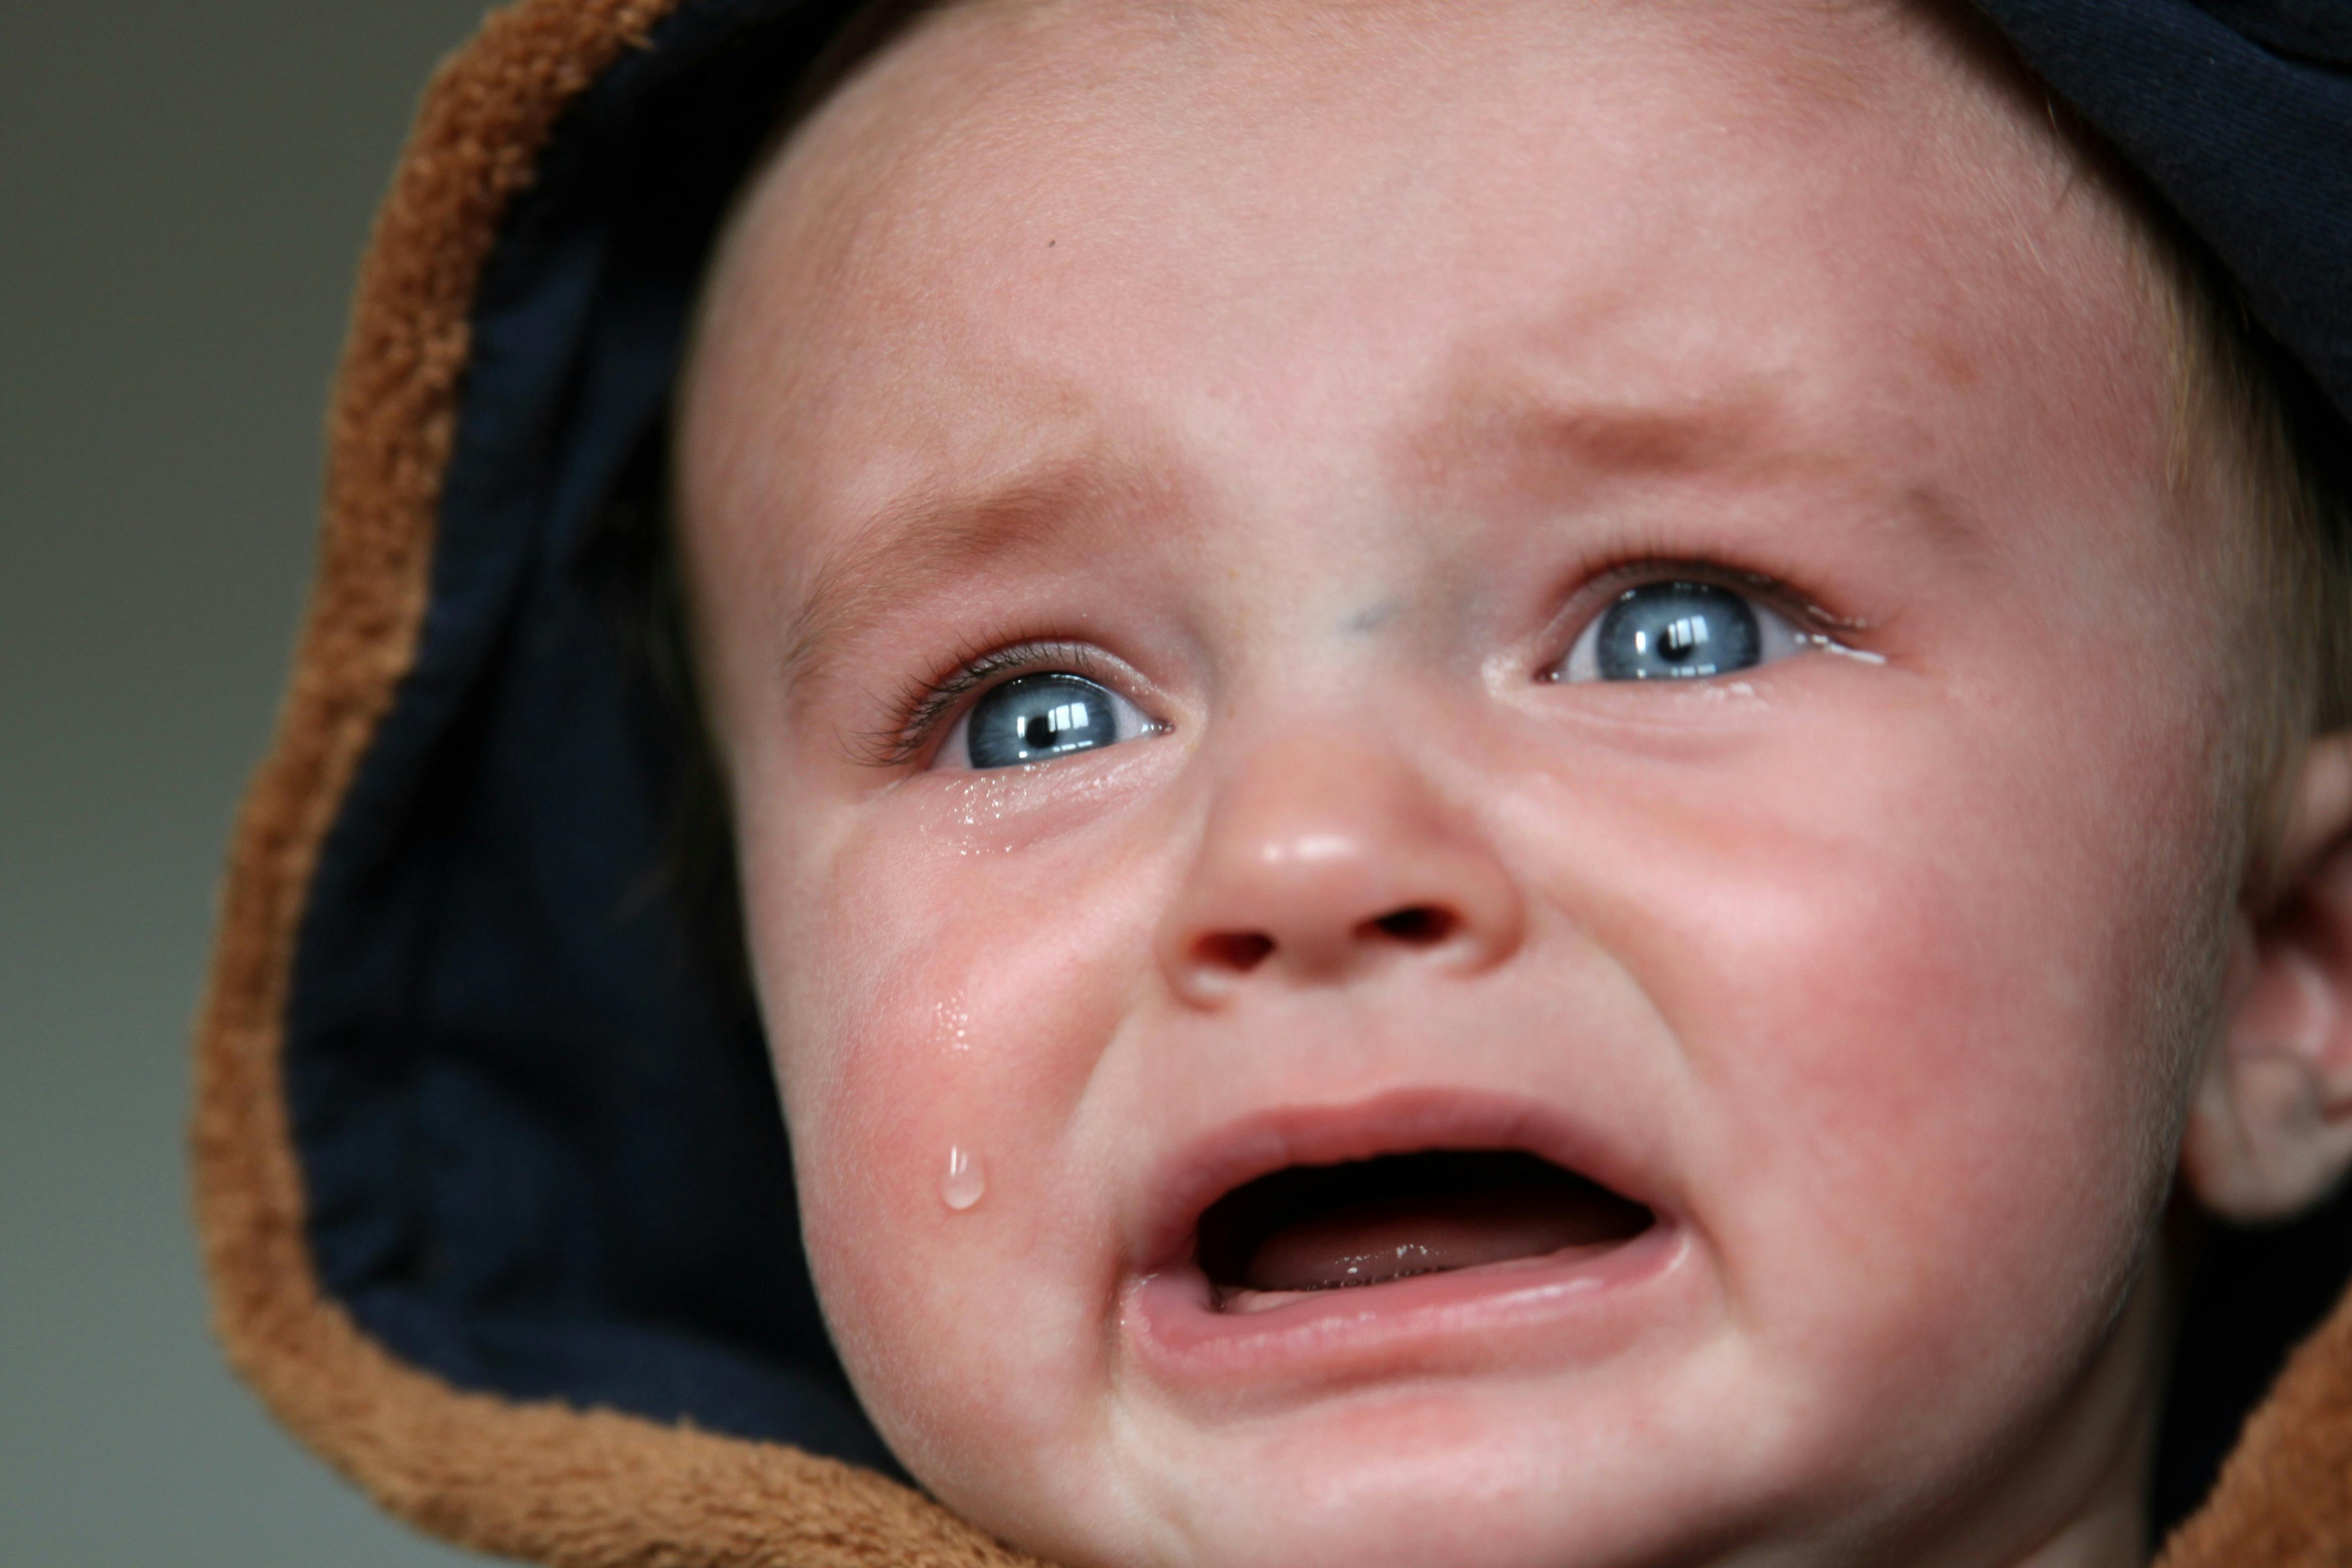 https://images.pexels.com/photos/47090/baby-tears-small-child-sad-47090.jpeg?cs=srgb&dl=pexels-pixabay-47090.jpg&fm=jpg